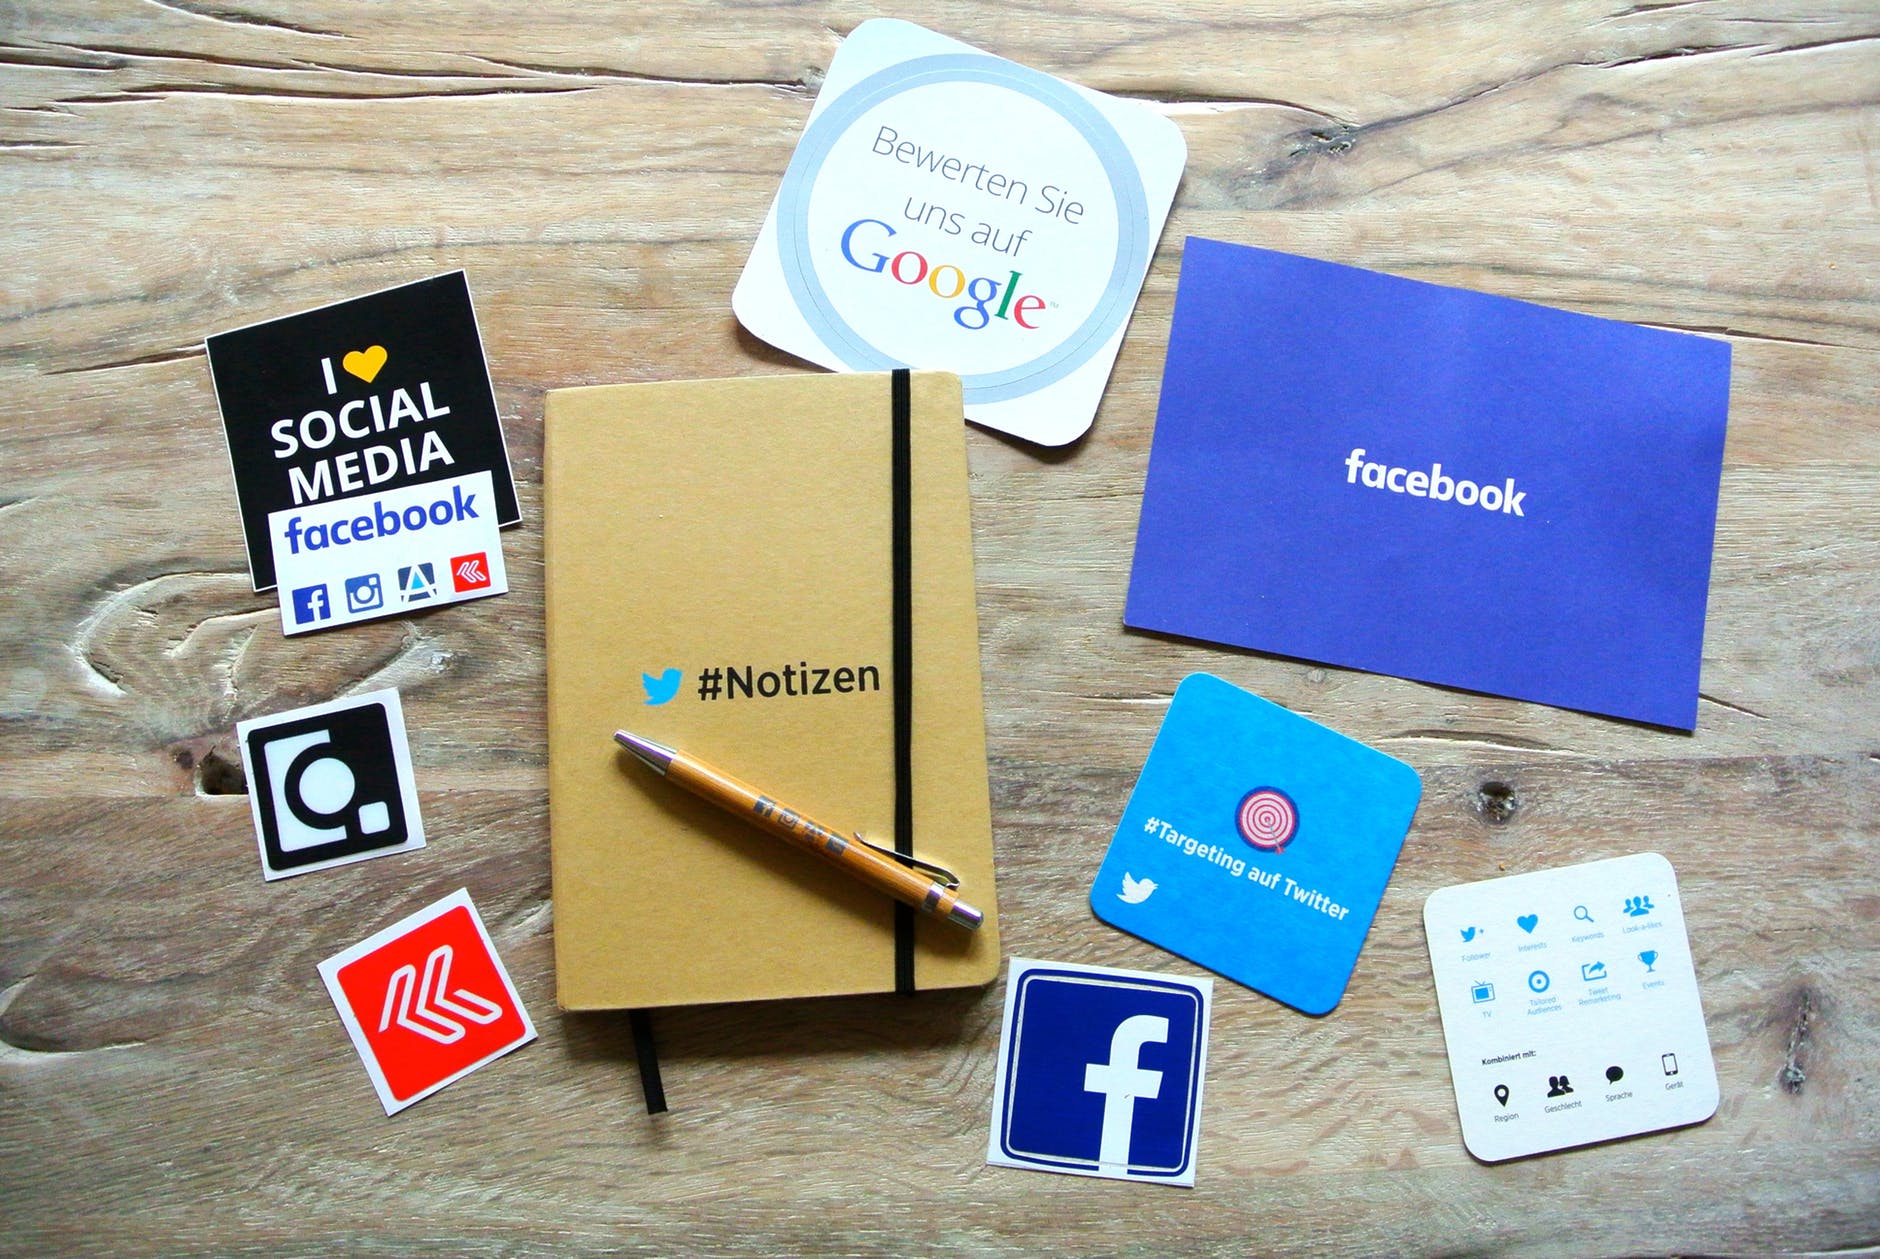 4 ways to rebrand social media